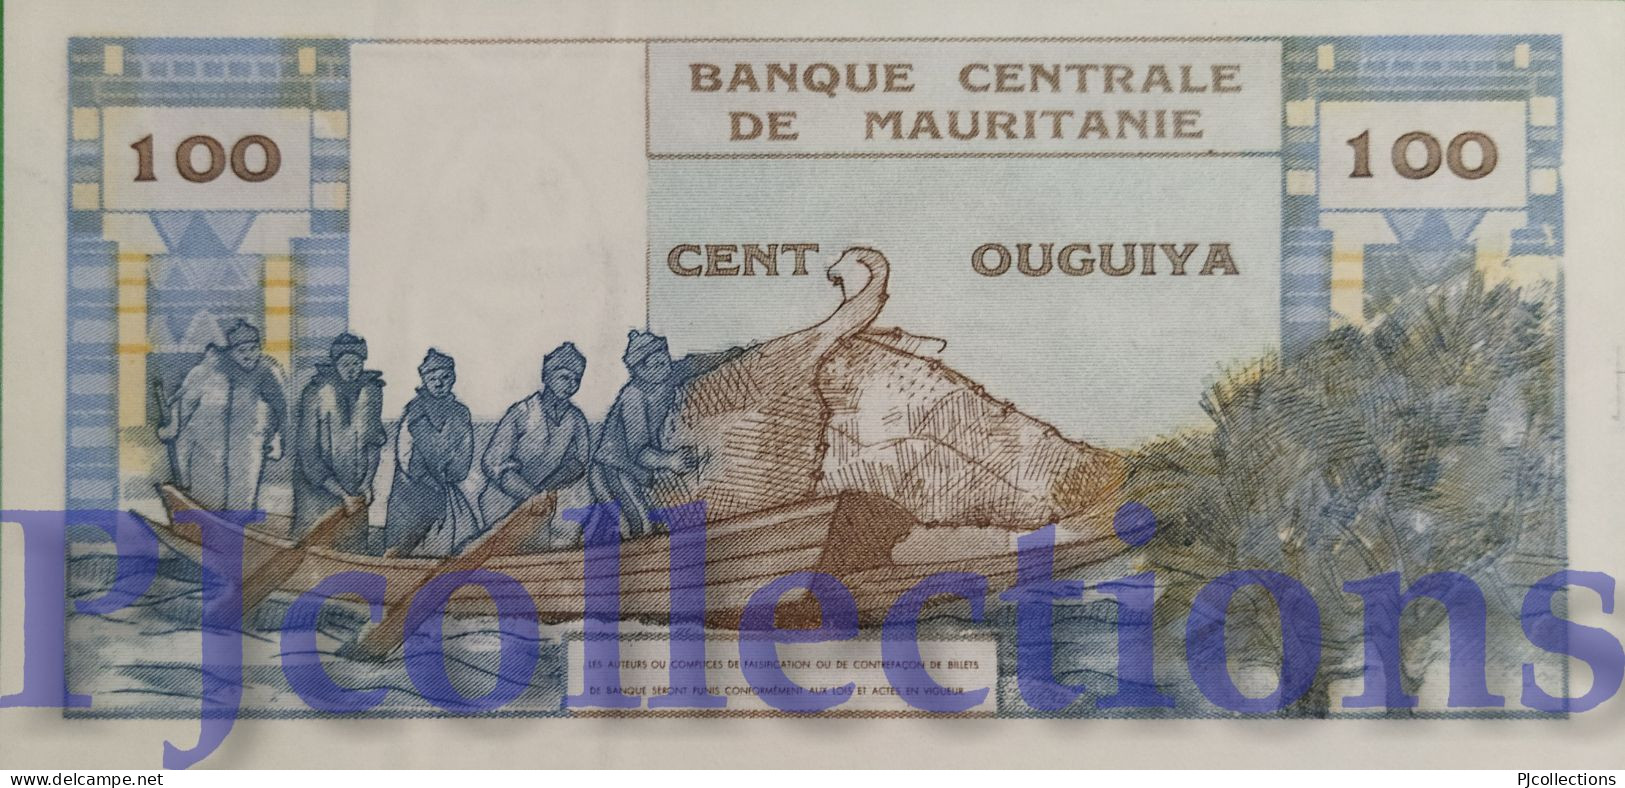 MAURITANIA 100 OUGUIYA 1973 PICK 1a UNC - Mauritanië